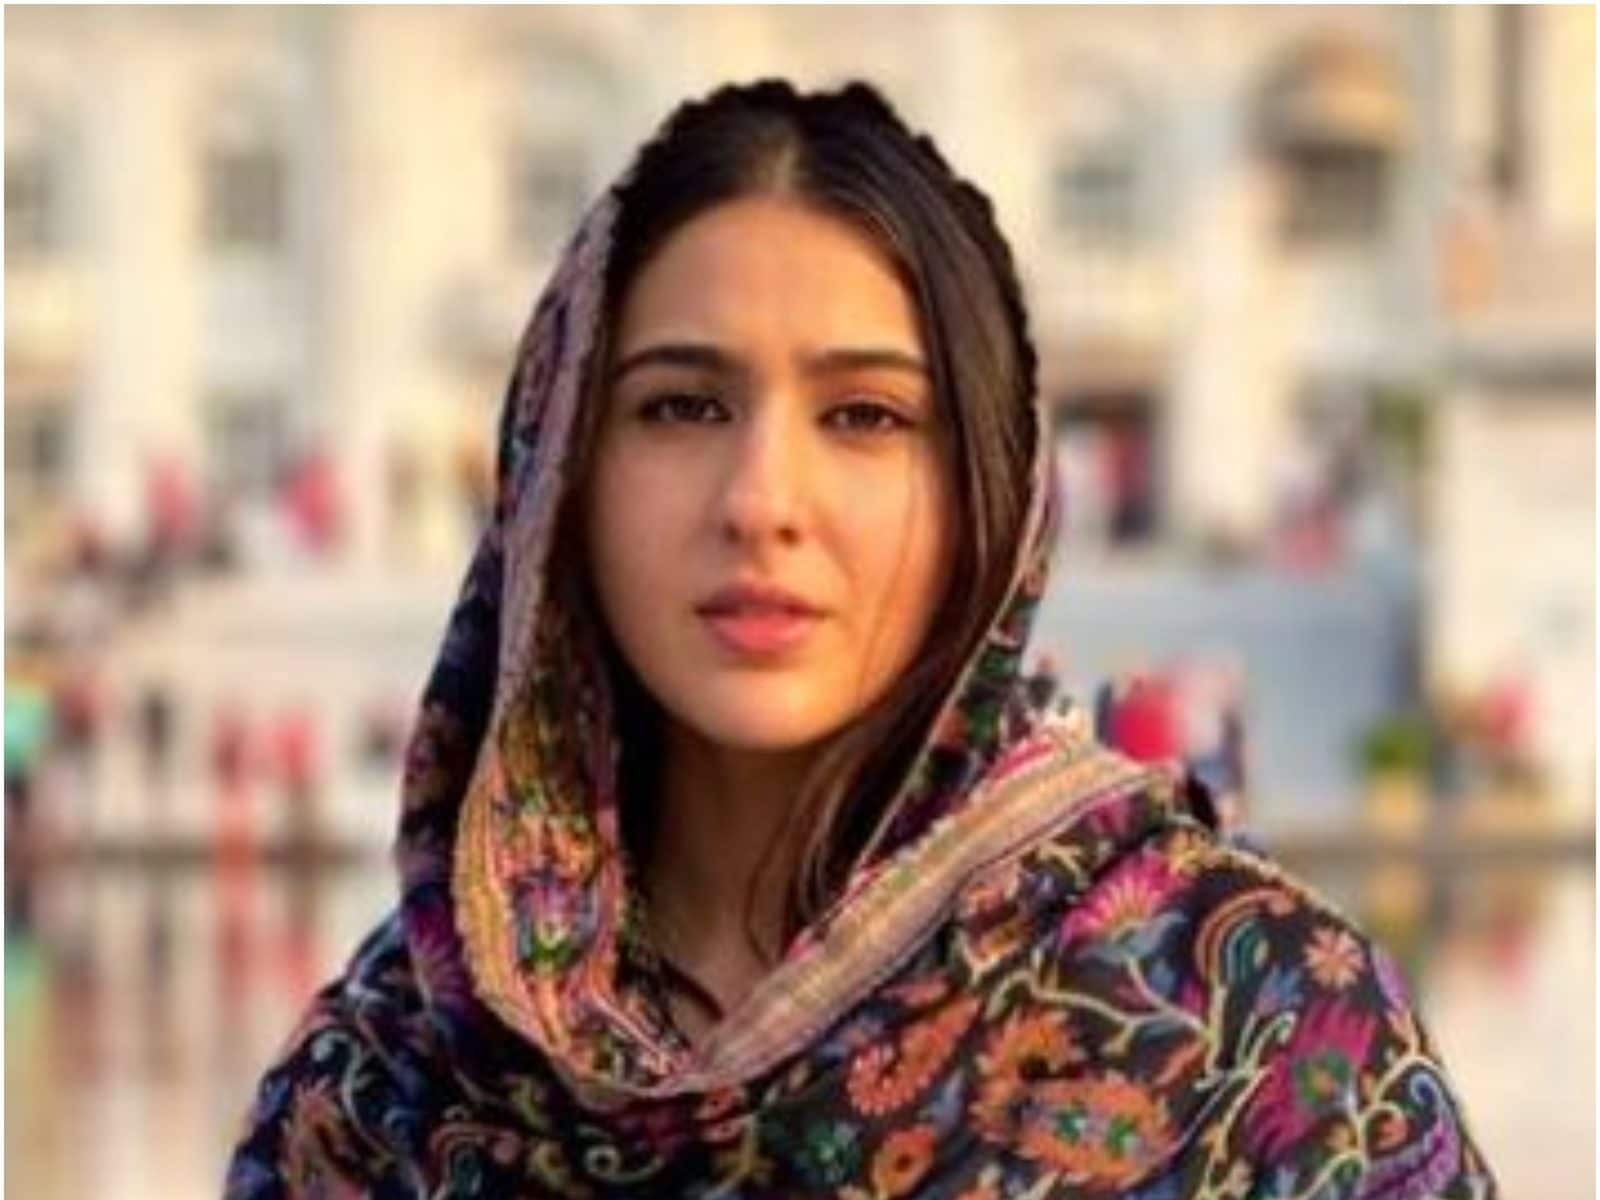 Sara Ali Khan Sexy Video Download - Watch: Sara Ali Khan Enjoys Qawwali at Delhi's Nizamuddin Dargah - News18